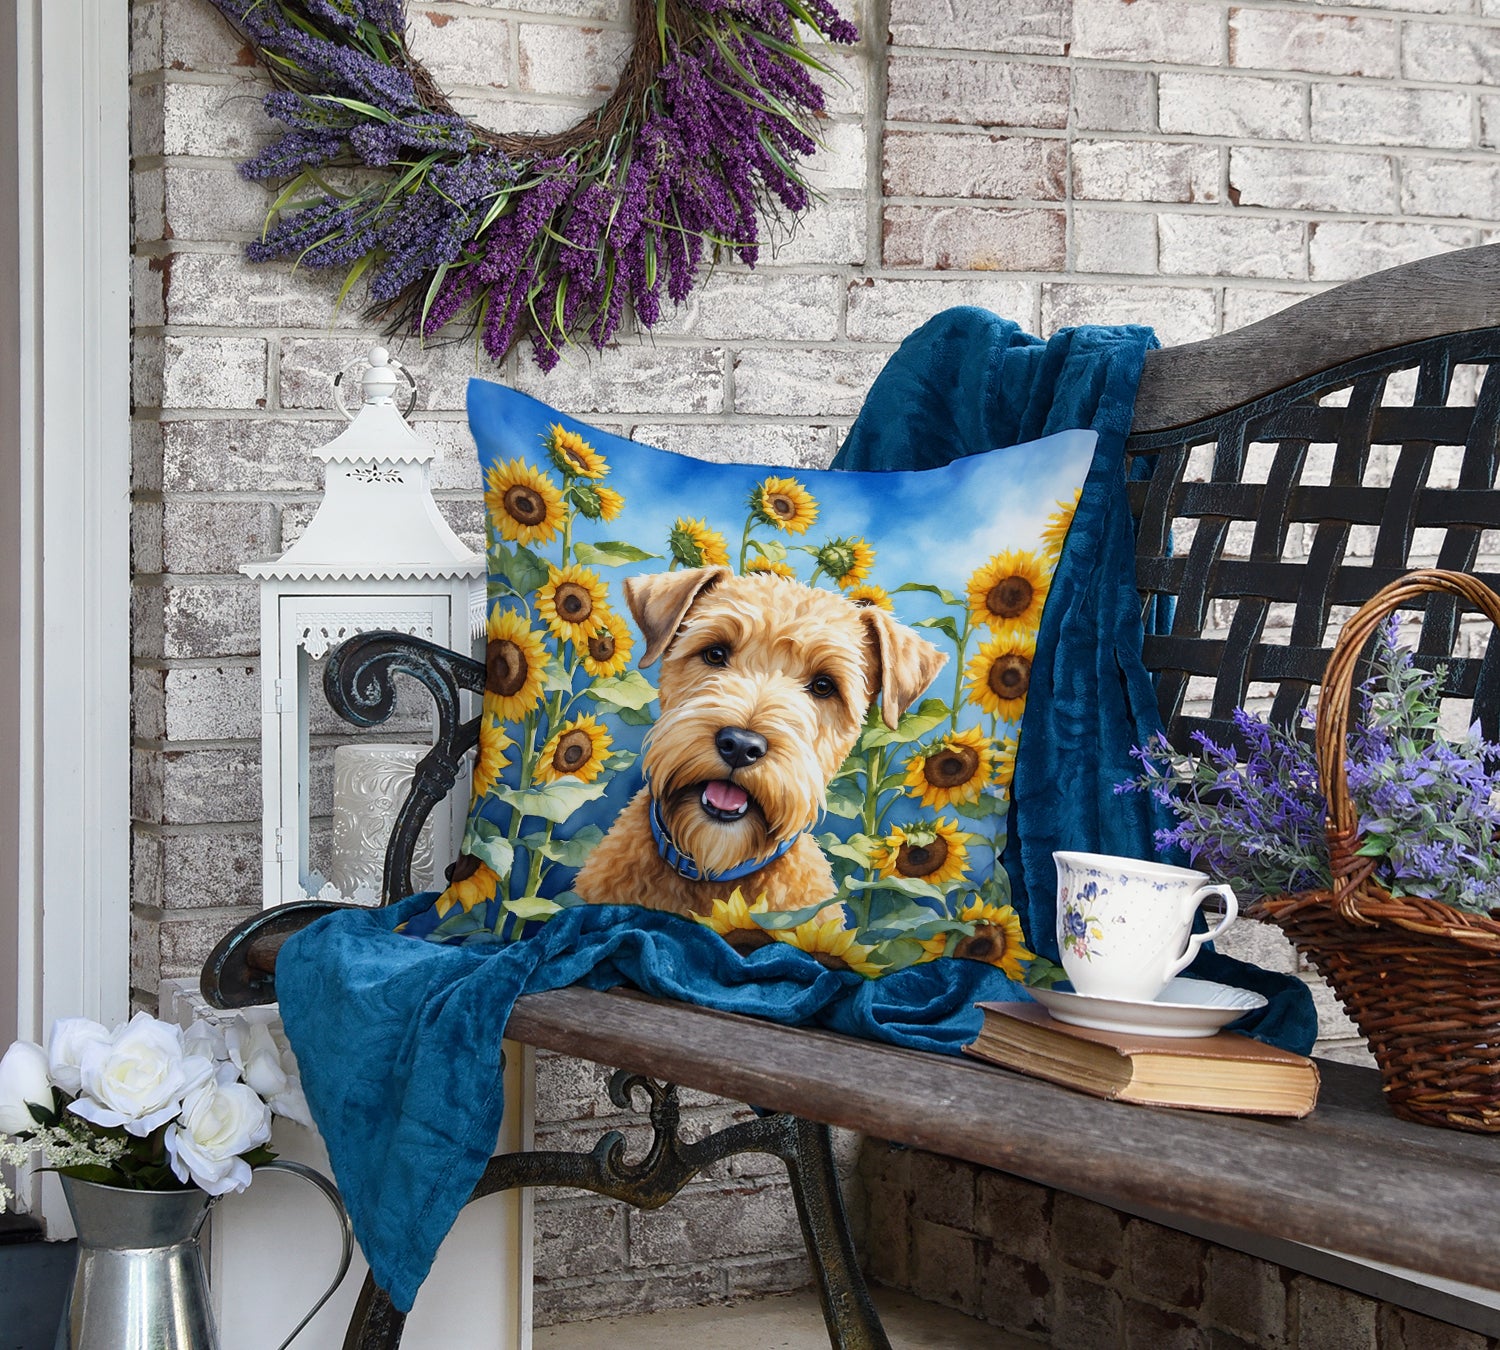 Wheaten Terrier in Sunflowers Throw Pillow